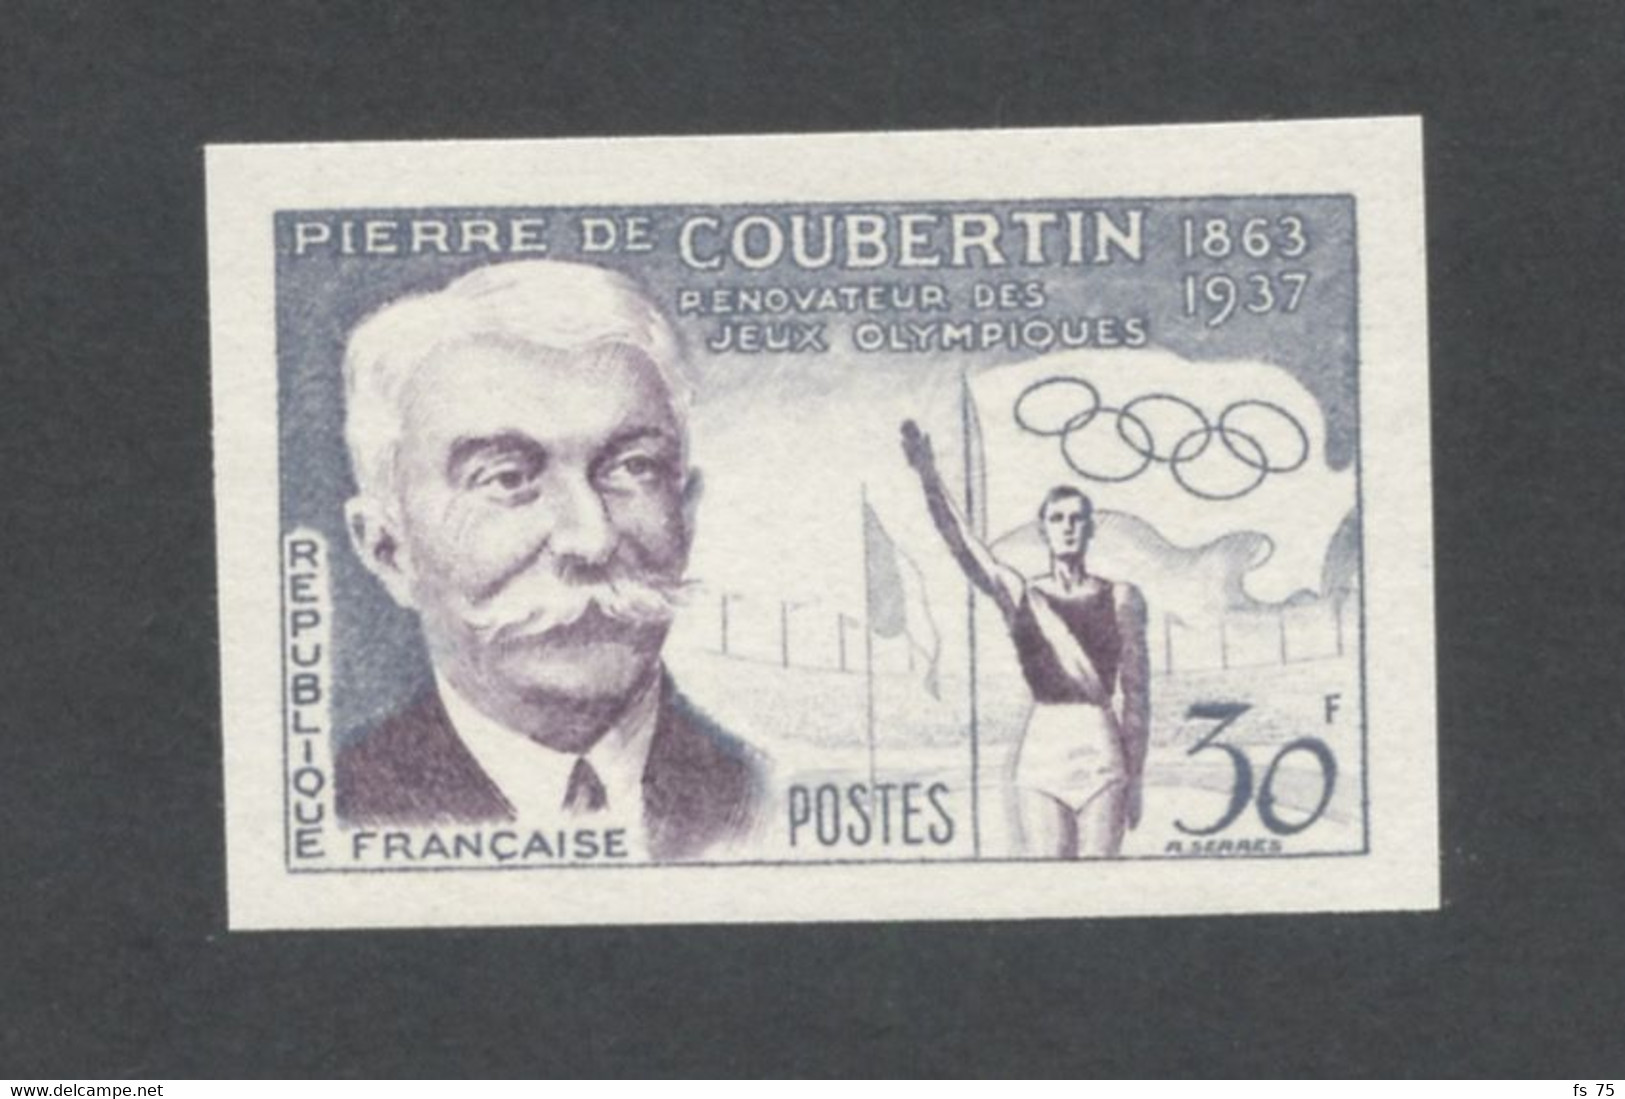 FRANCE - N°1088  30F PIERRE DE COUBERTIN - NON DENTELE - NEUF SANS CHARNIERE - 1951-1960